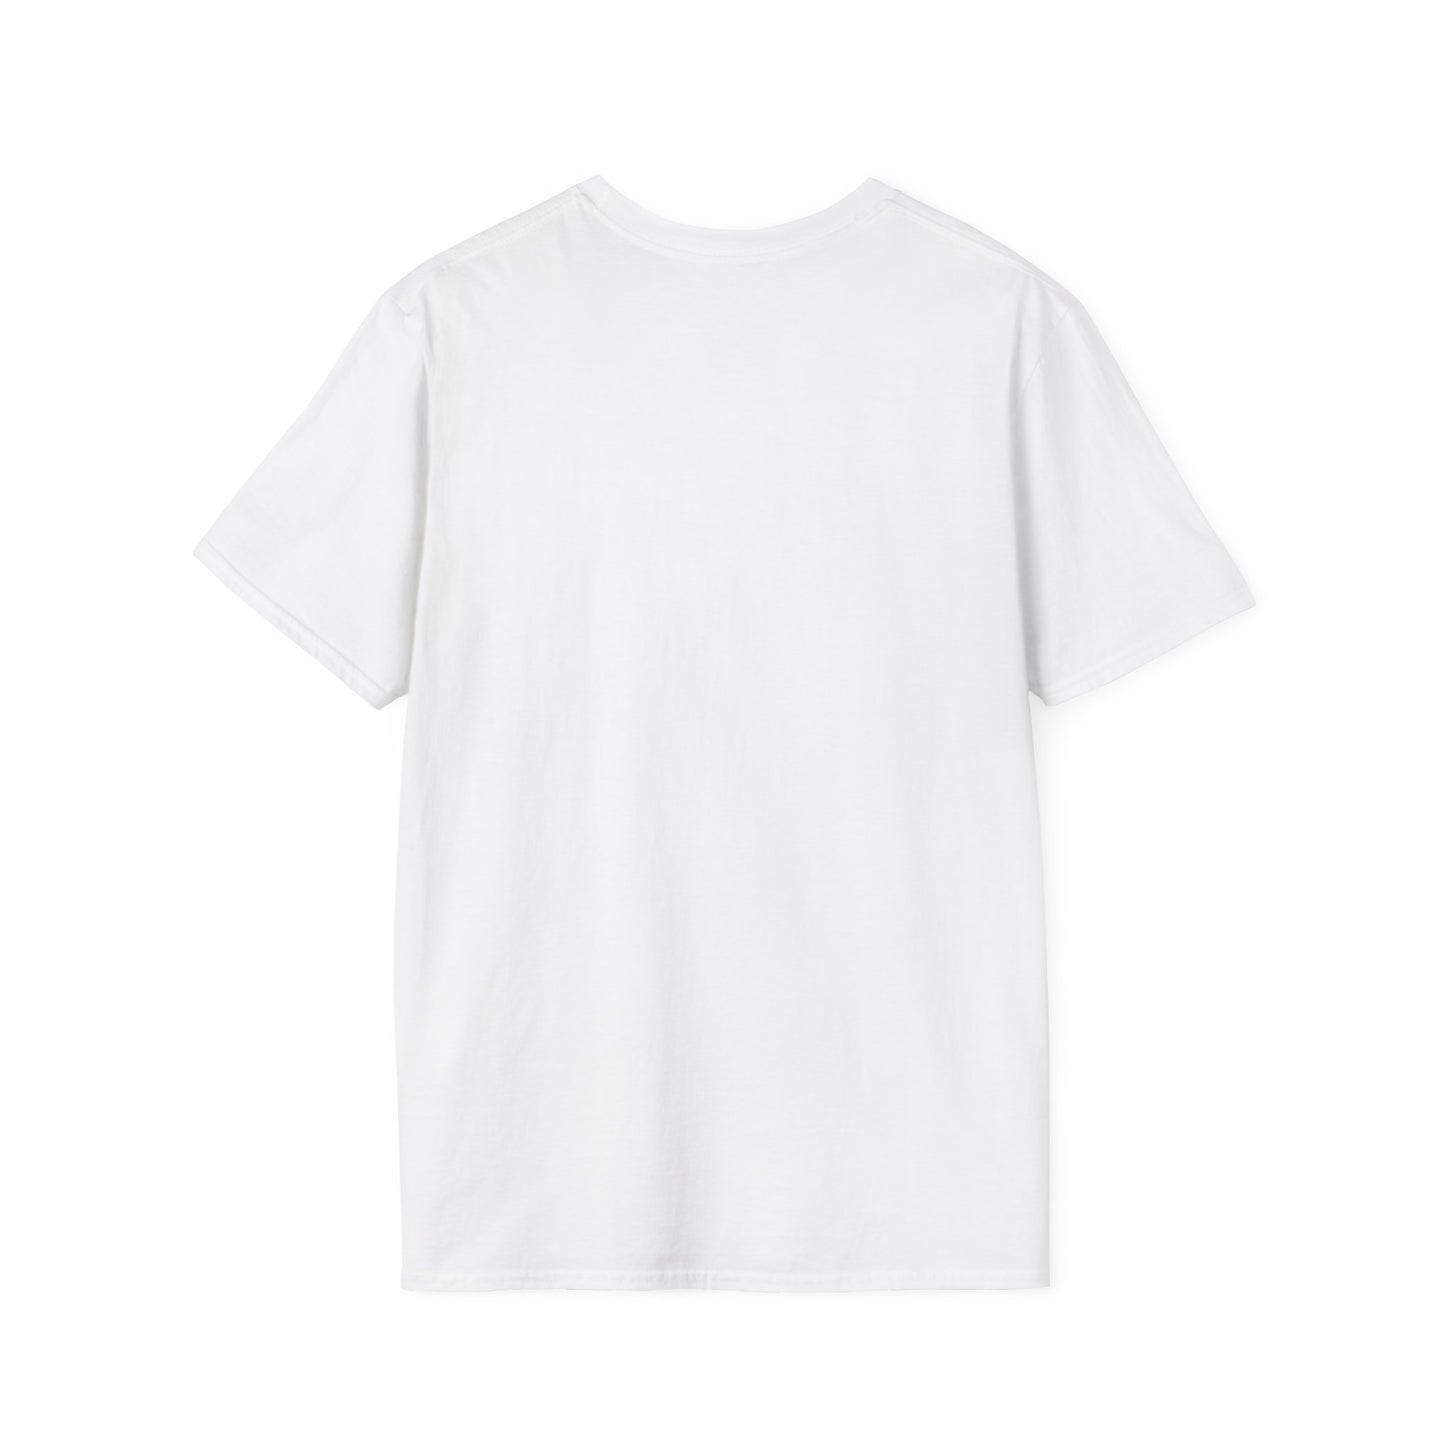 LIBBY  Unisex Softstyle T-Shirt